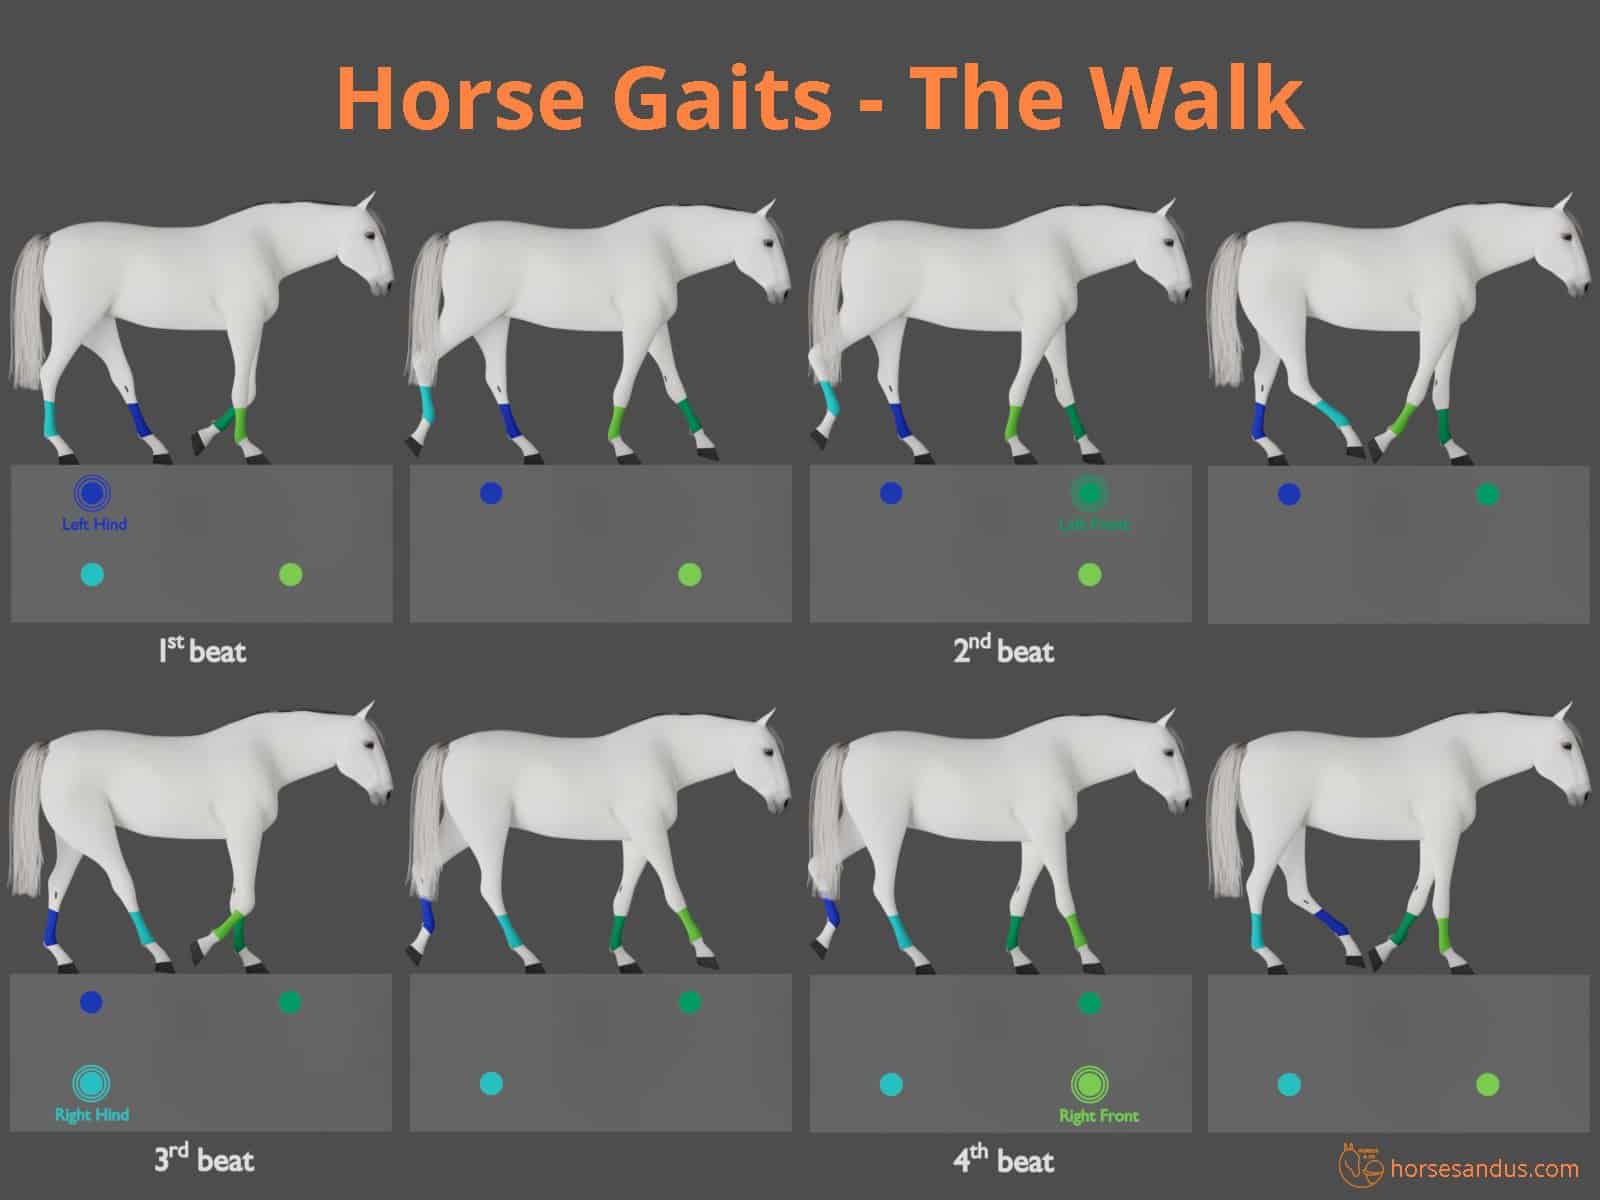 Horse gaits - the walk cycle - diagram